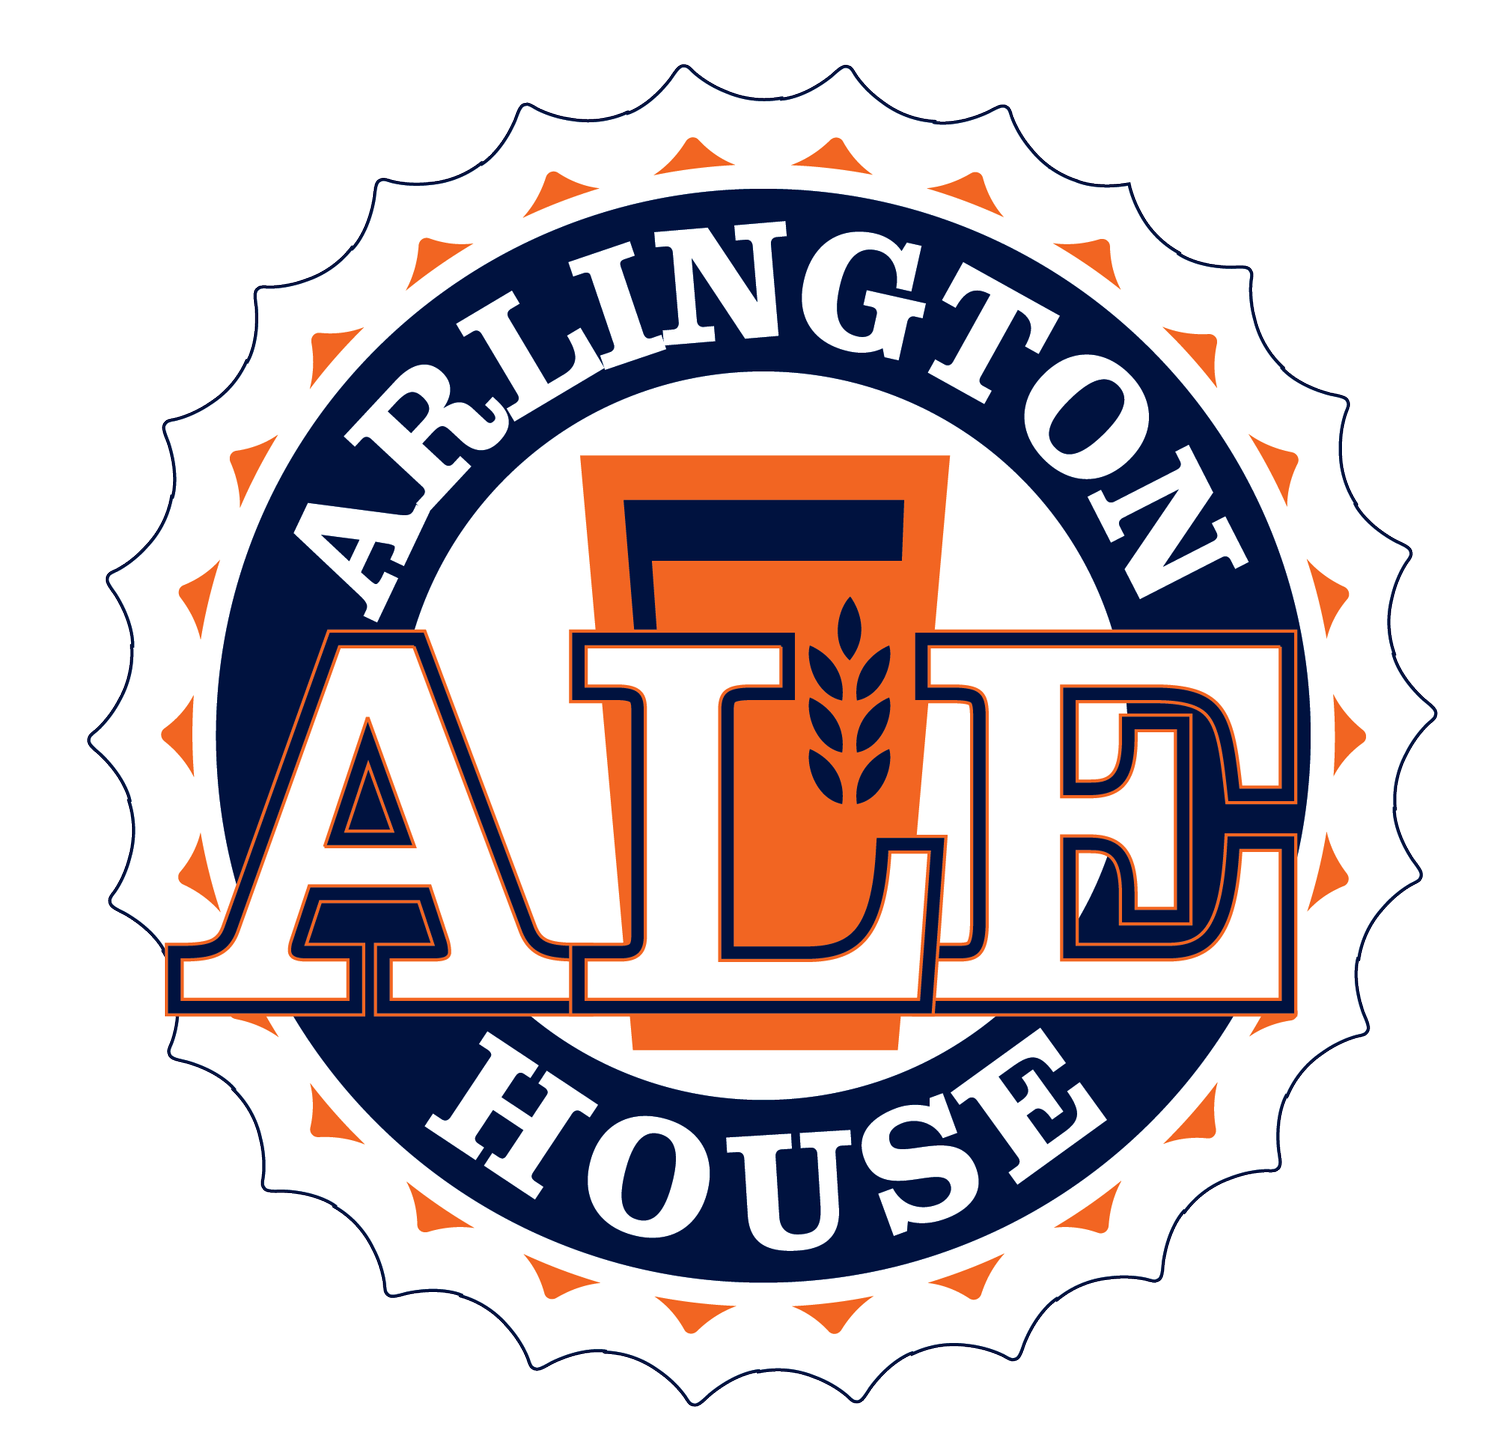 Arlington Ale House